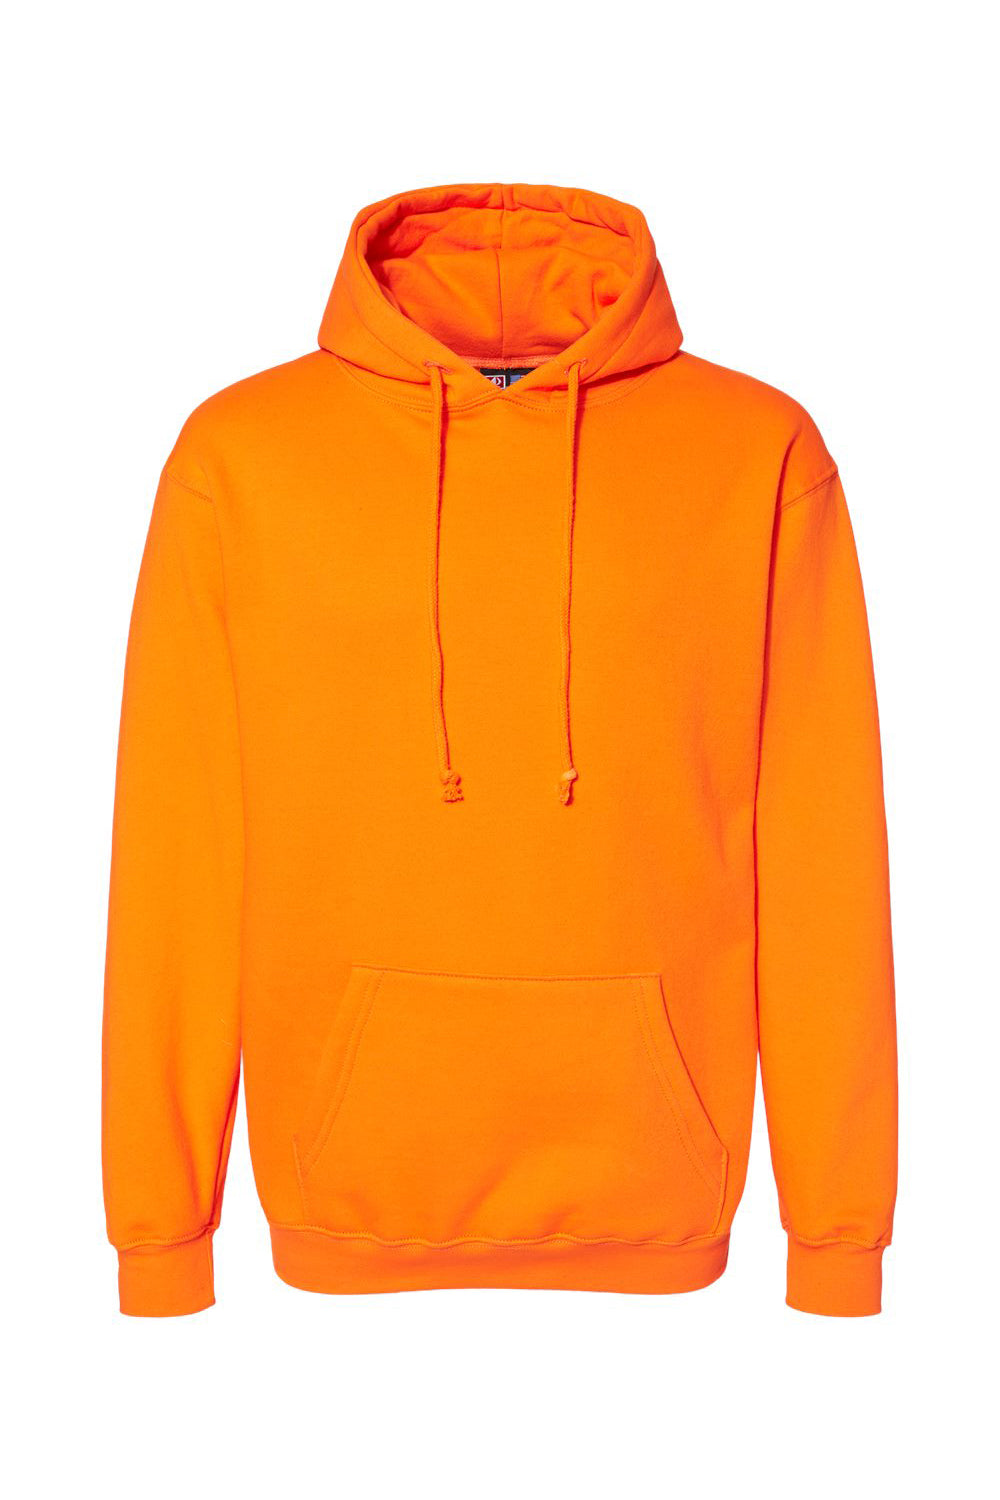 Bayside BA960 Mens USA Made Hooded Sweatshirt Hoodie Bright Orange Flat Front